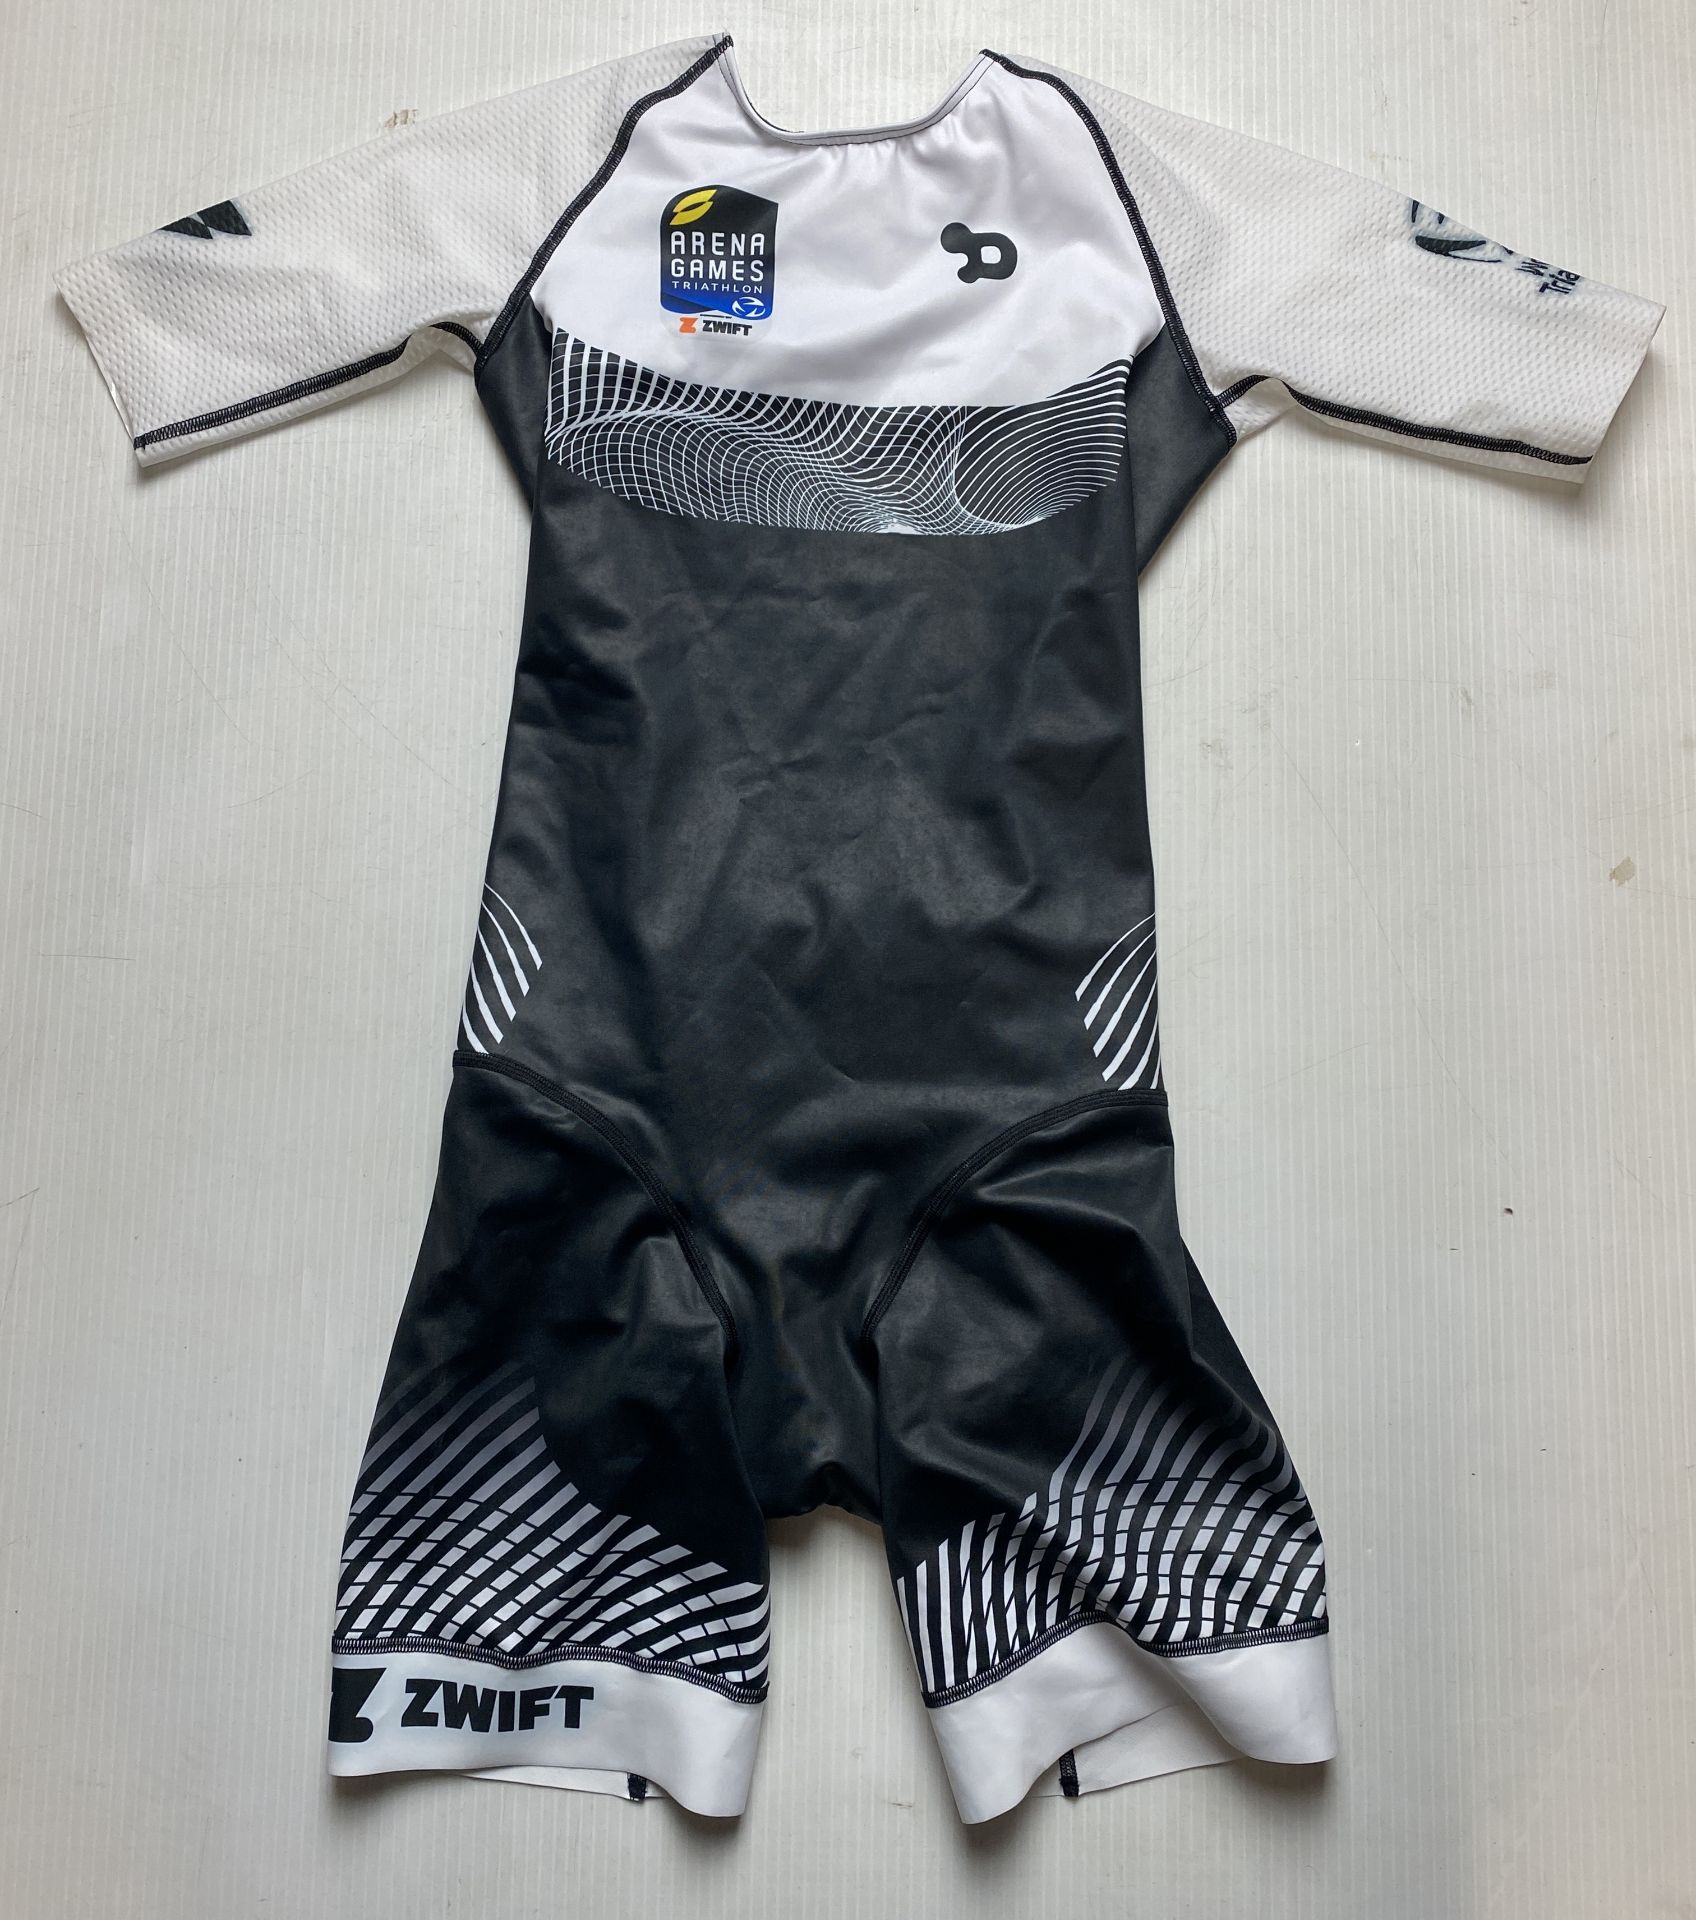 2 x Dryworld Arena Games Triathlon Elite Women's Race Suits - Black/White & Black/Black - Size S - - Image 2 of 3